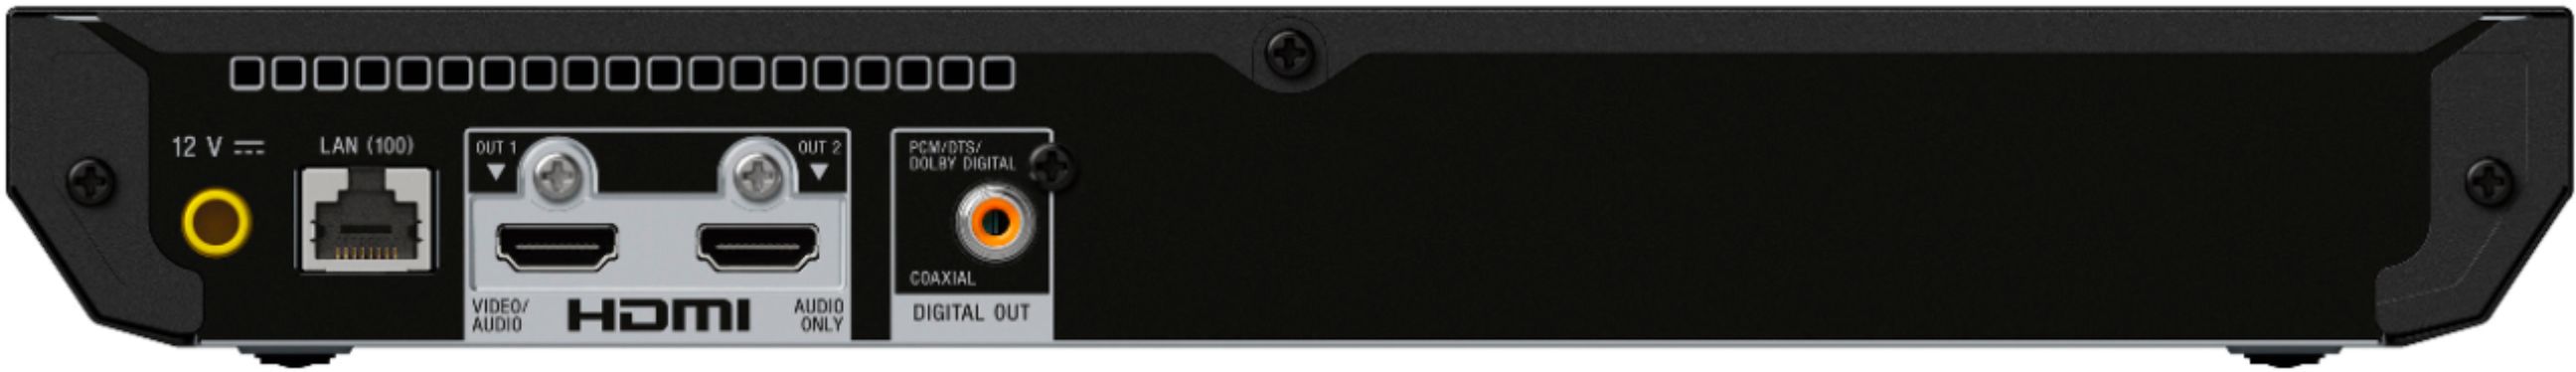 Sony UBP-X700/M Streaming 4K Ultra HD Blu-ray player with HDMI 